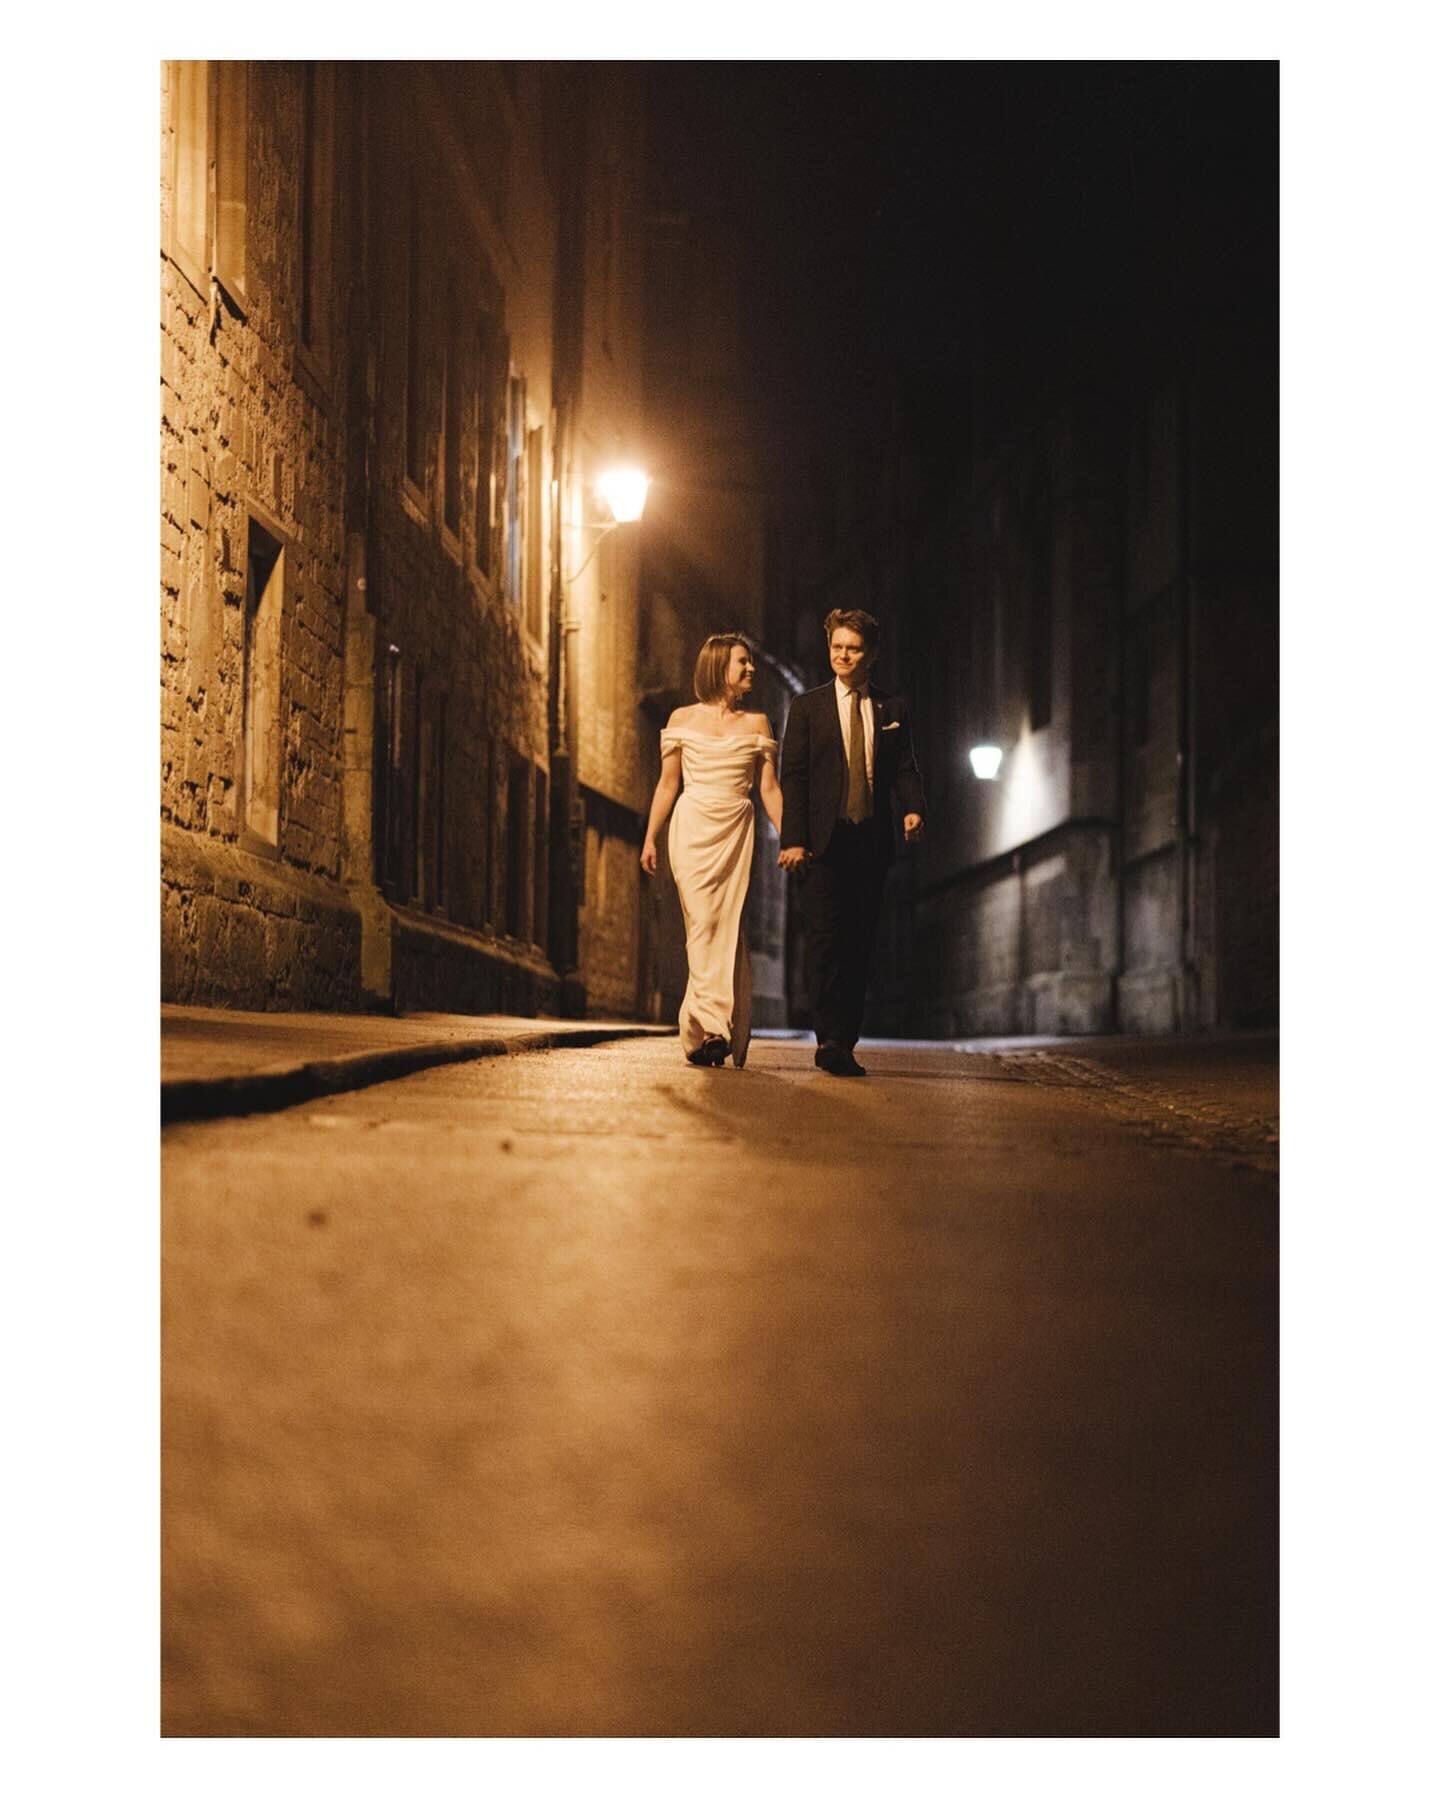 Nighttime wedding photography around Radcliffe Square, Oxford.

@brasenosecollege @oxford_uni #oxfordwedding #oxfordshirewedding #oxfordshireweddingphotographer #oxfordweddingphotographer #weddingphotography #nighttimephotography #nighttimeweddingpho